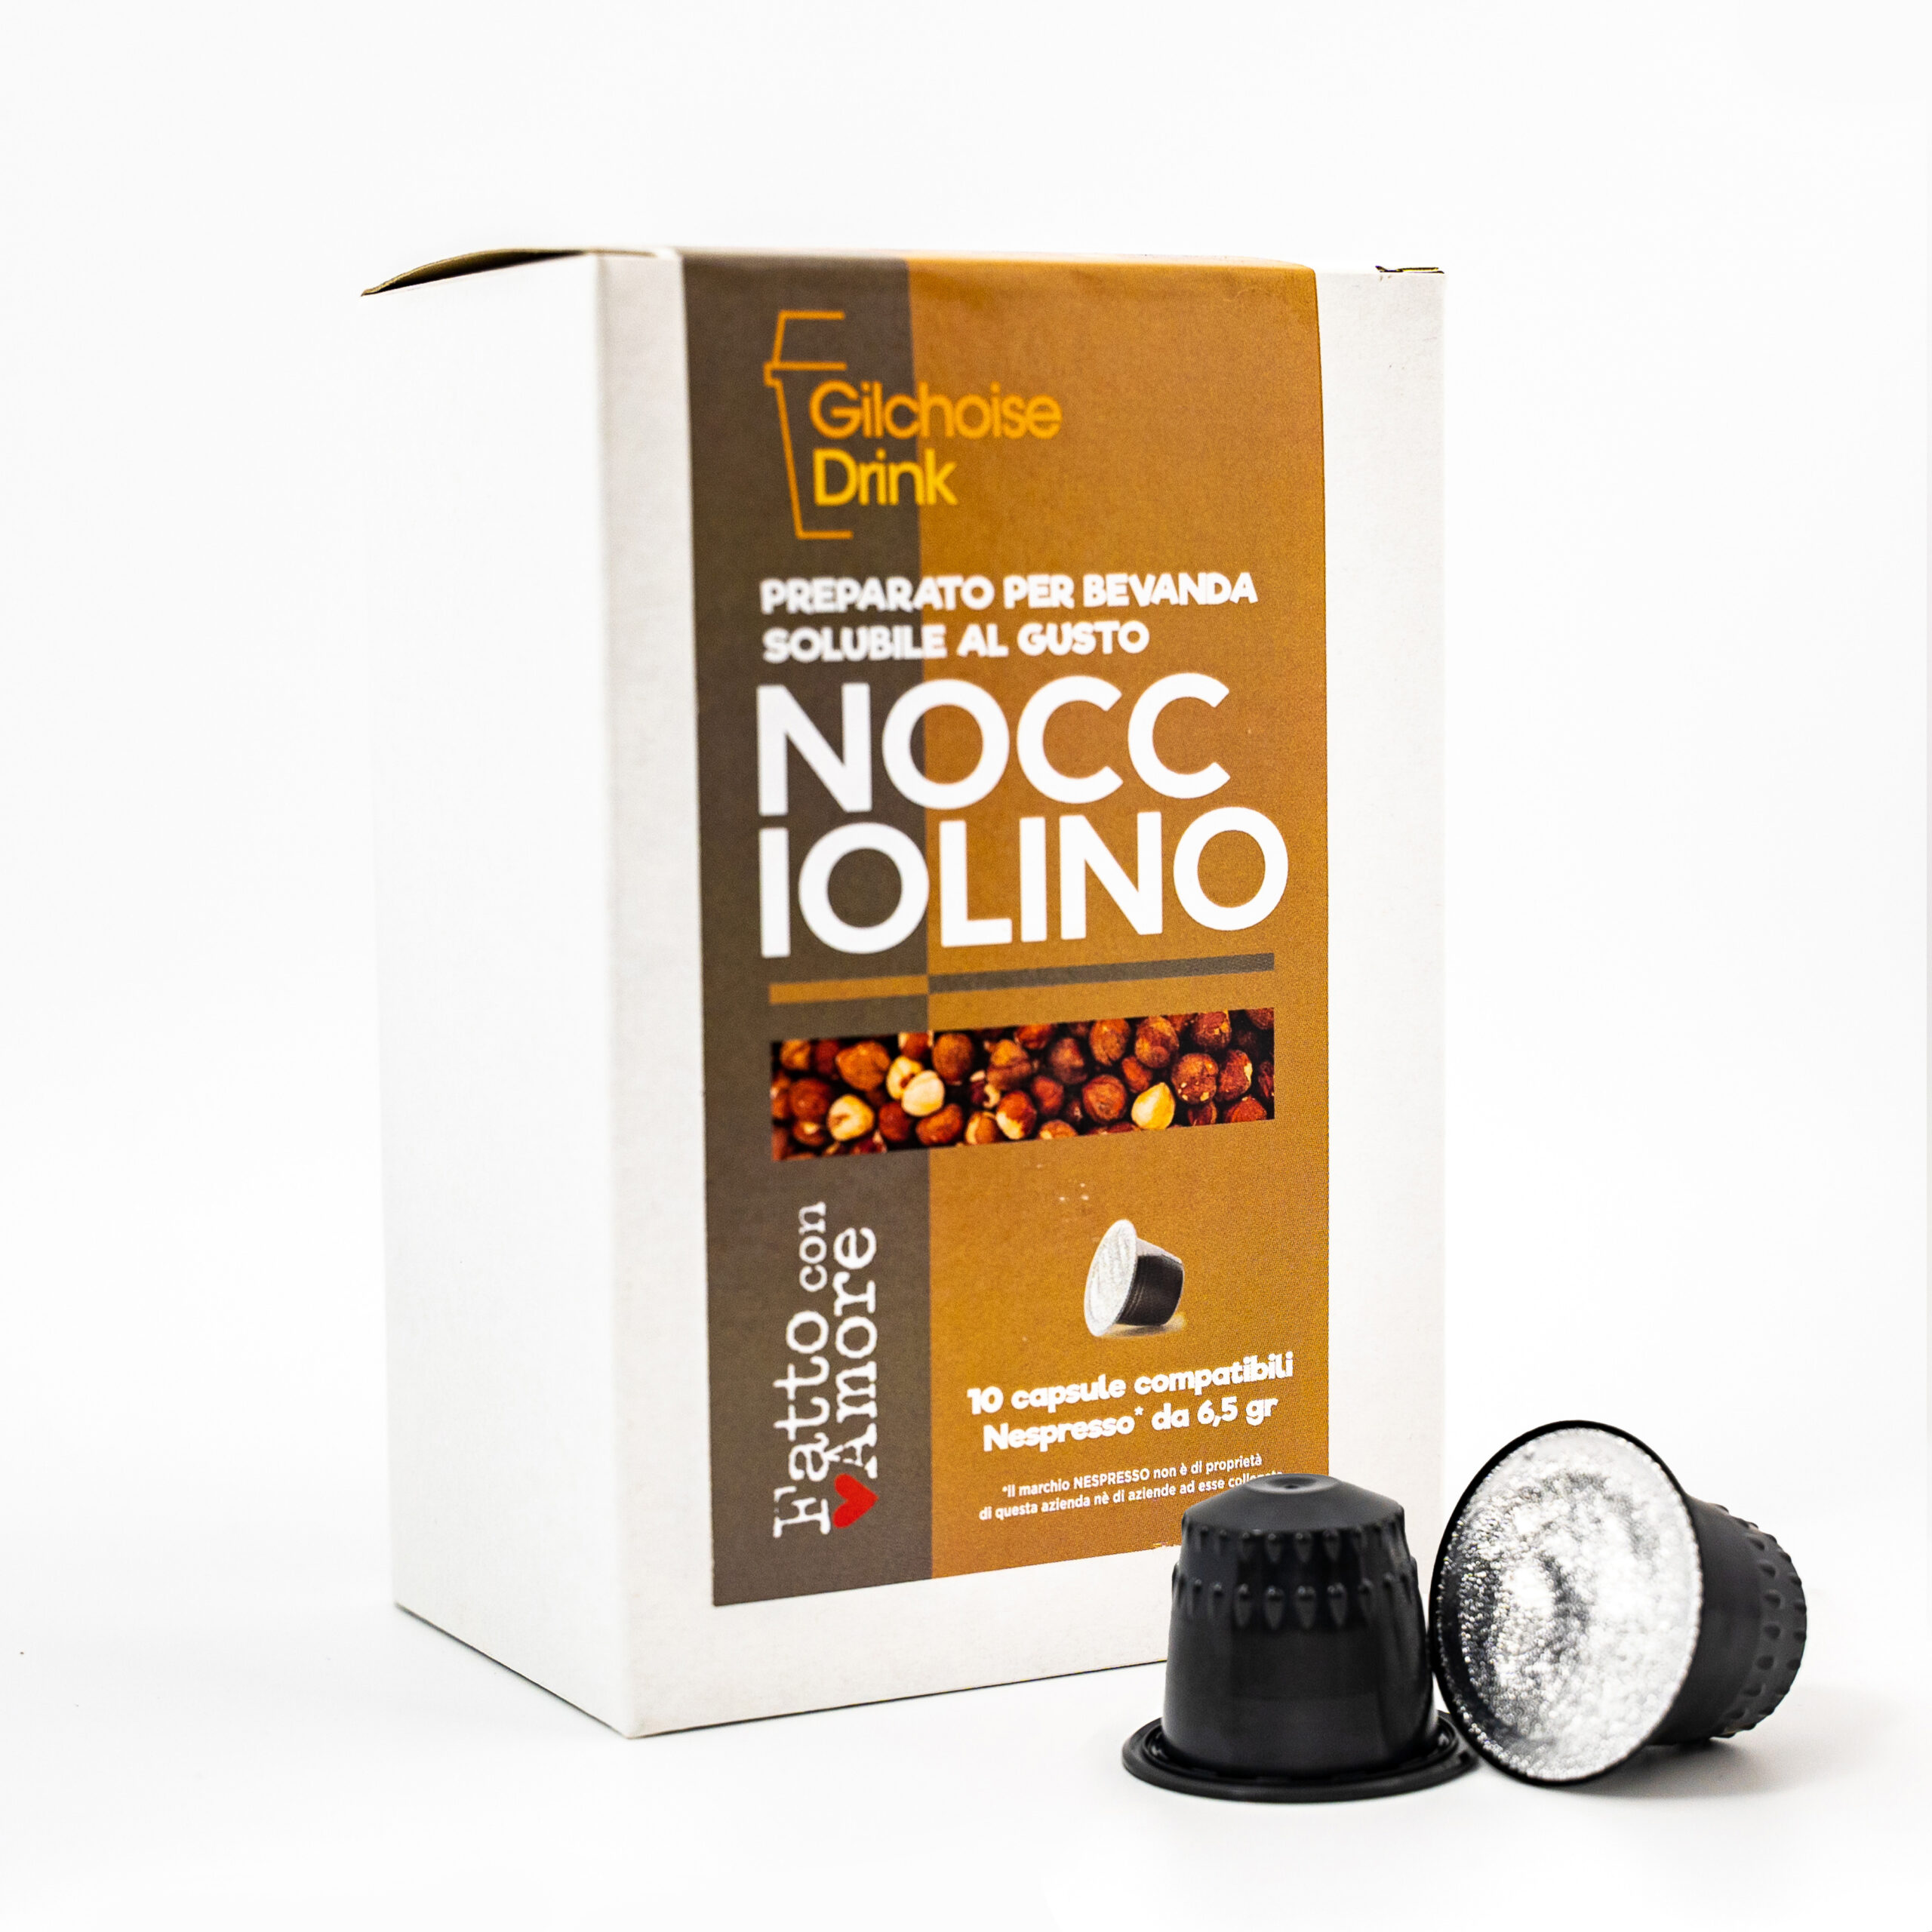 https://magikaffe.com/wp-content/uploads/2021/01/Nocciolino-capsule-compatibili-Nespresso-scaled.jpg